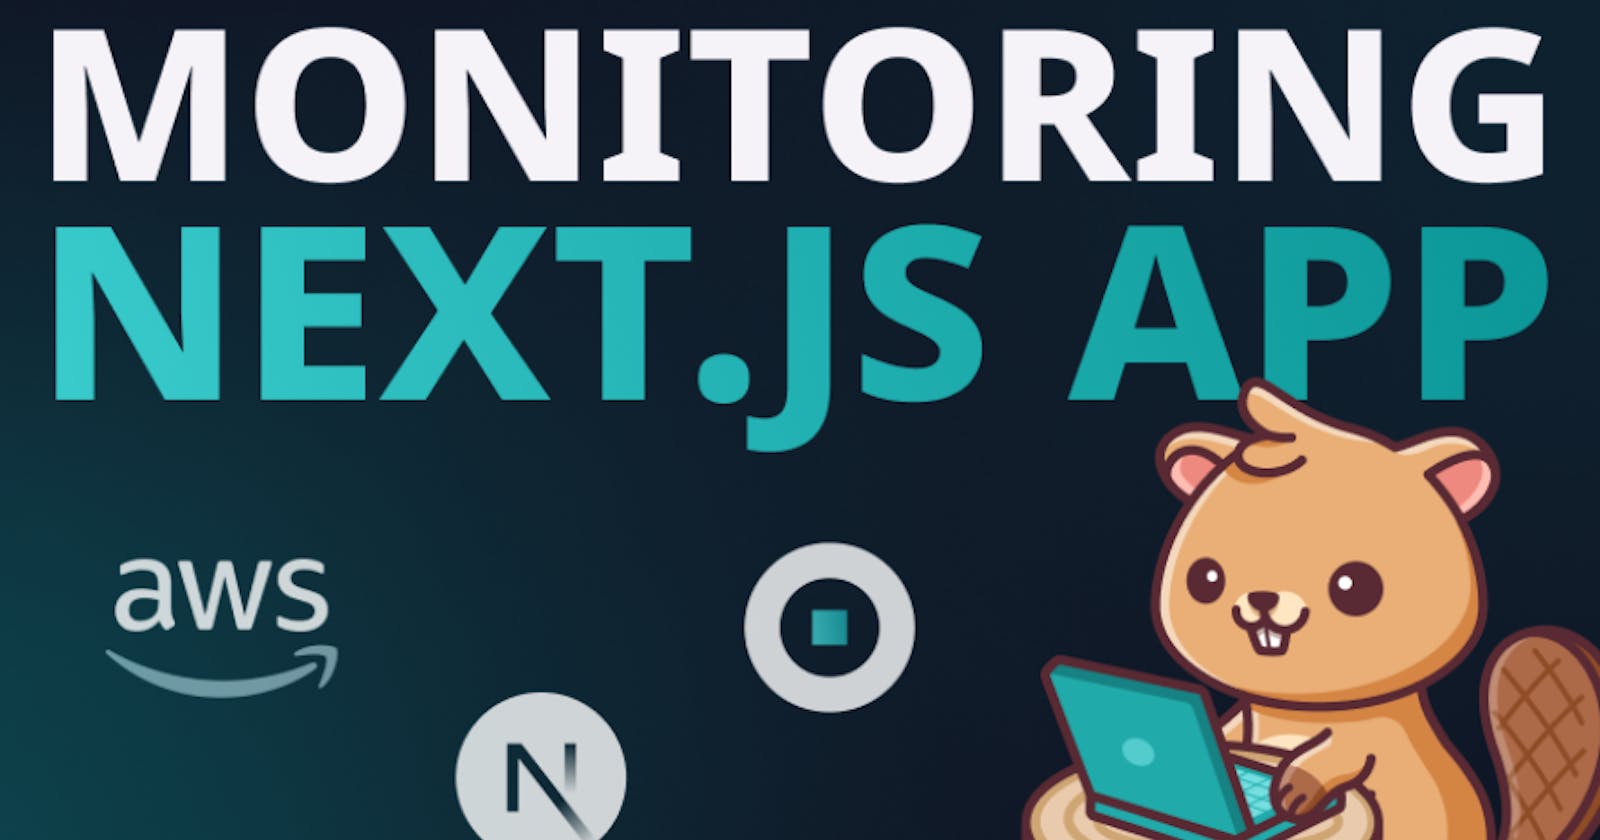 Monitoring a Next.js Application with Komiser